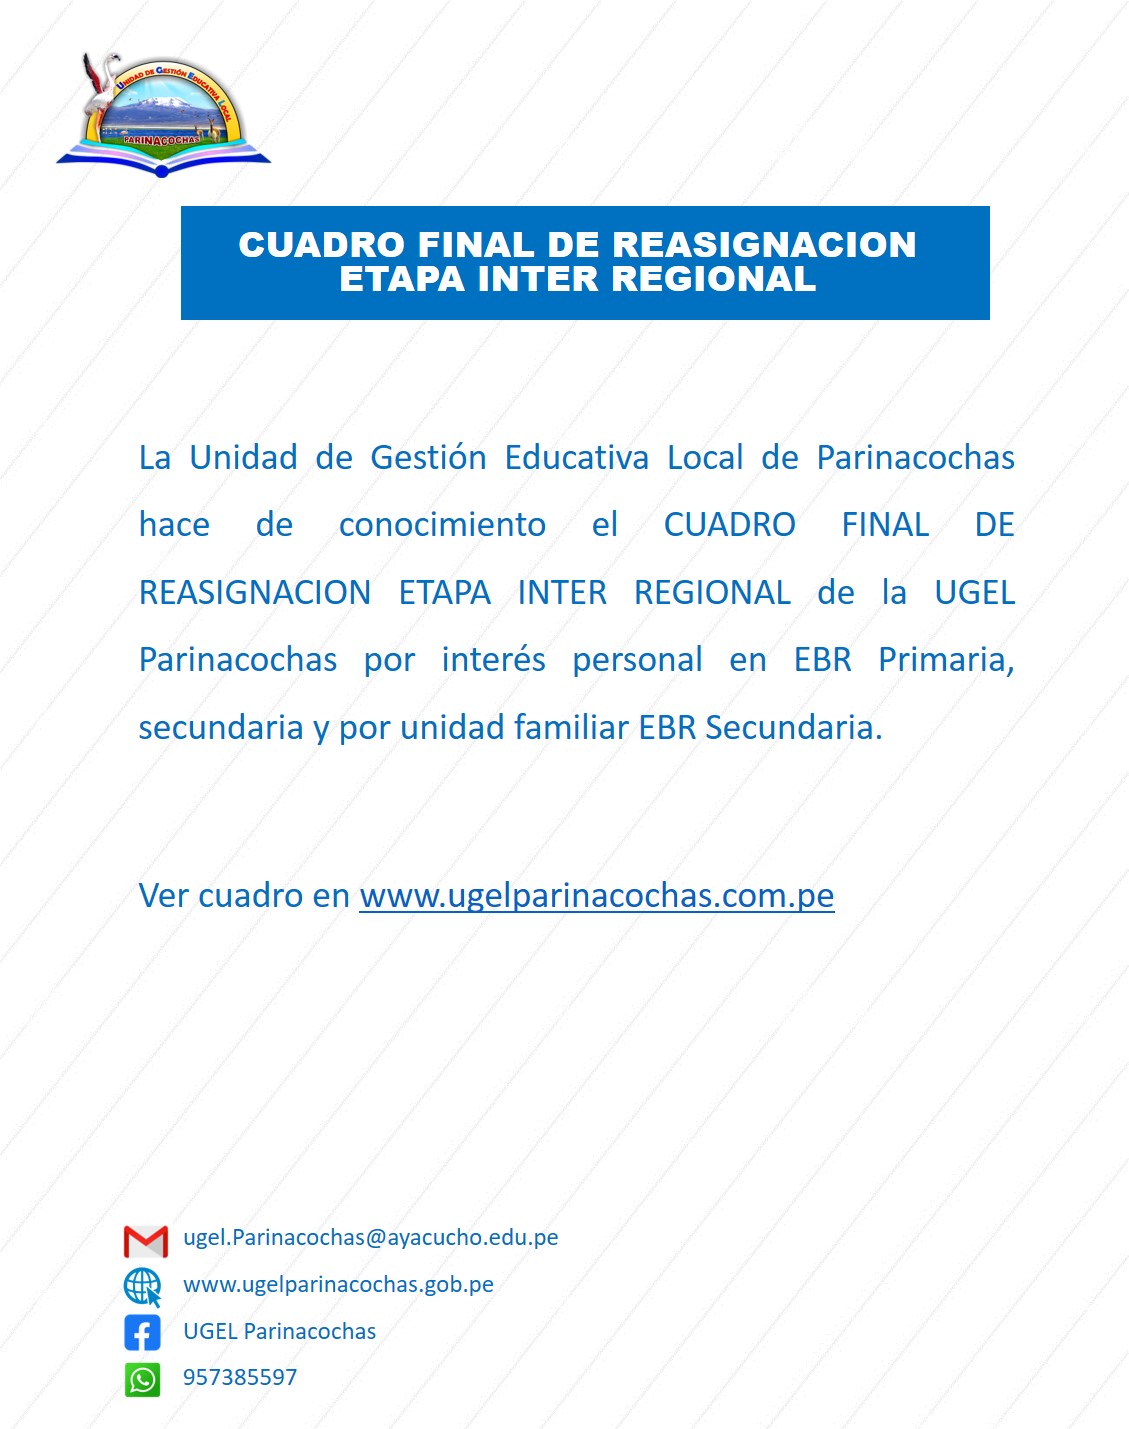 CUADRO FINAL DE REASIGNACION ETAPA INTER REGIONAL